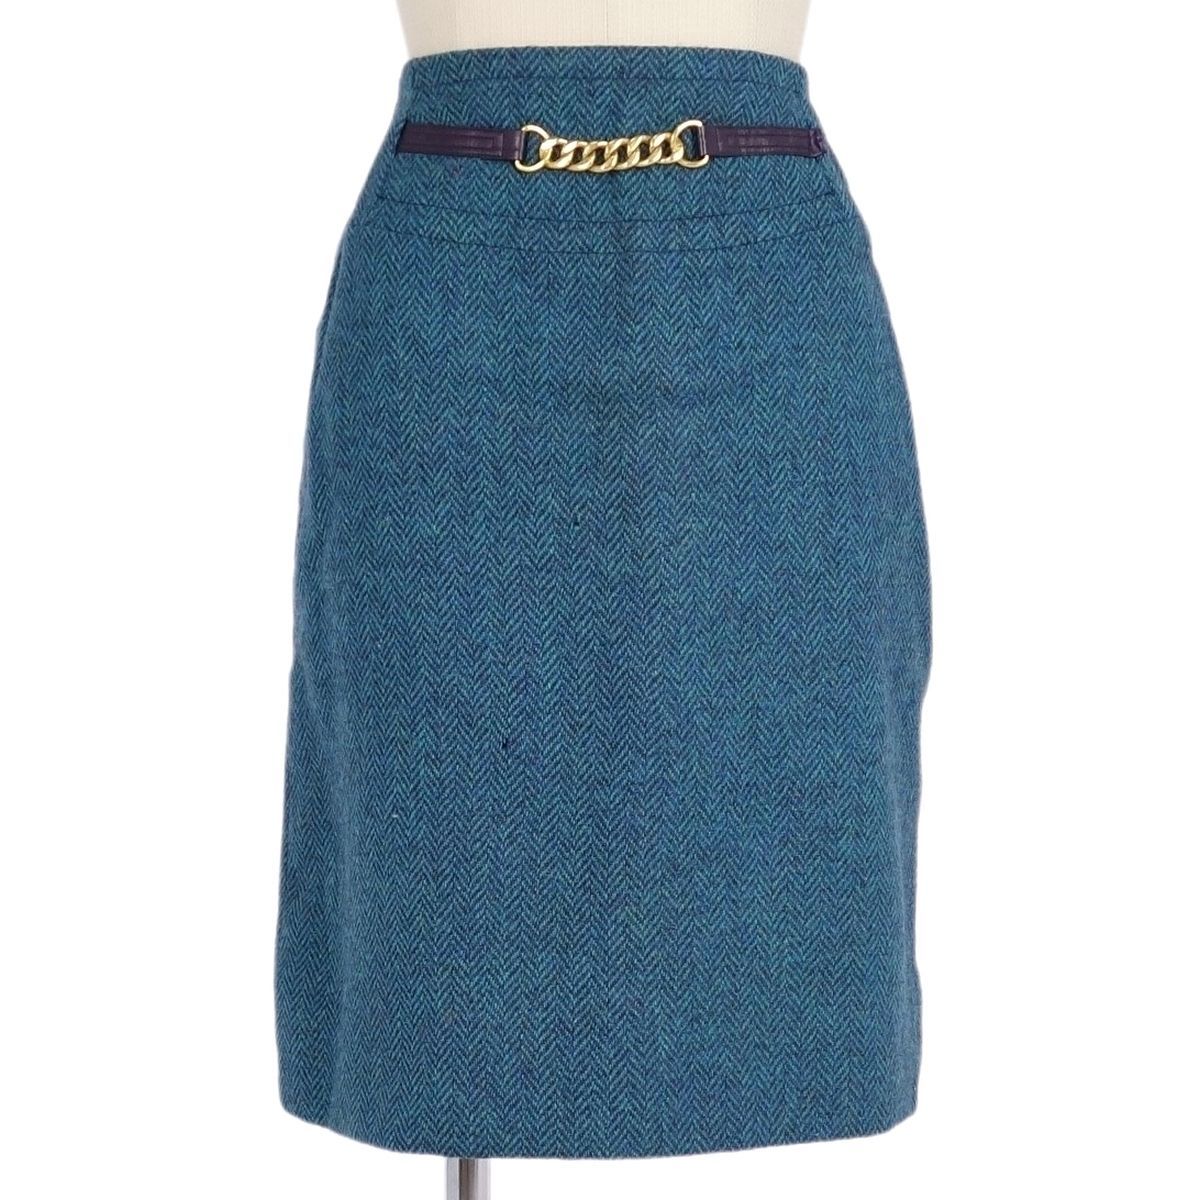 Vintage セリーヌ CELINE スカート ツイード チェーン金具 ウール レディース ボトムス フランス製 40(M相当) グリーン  ch02ob-rm04b21791